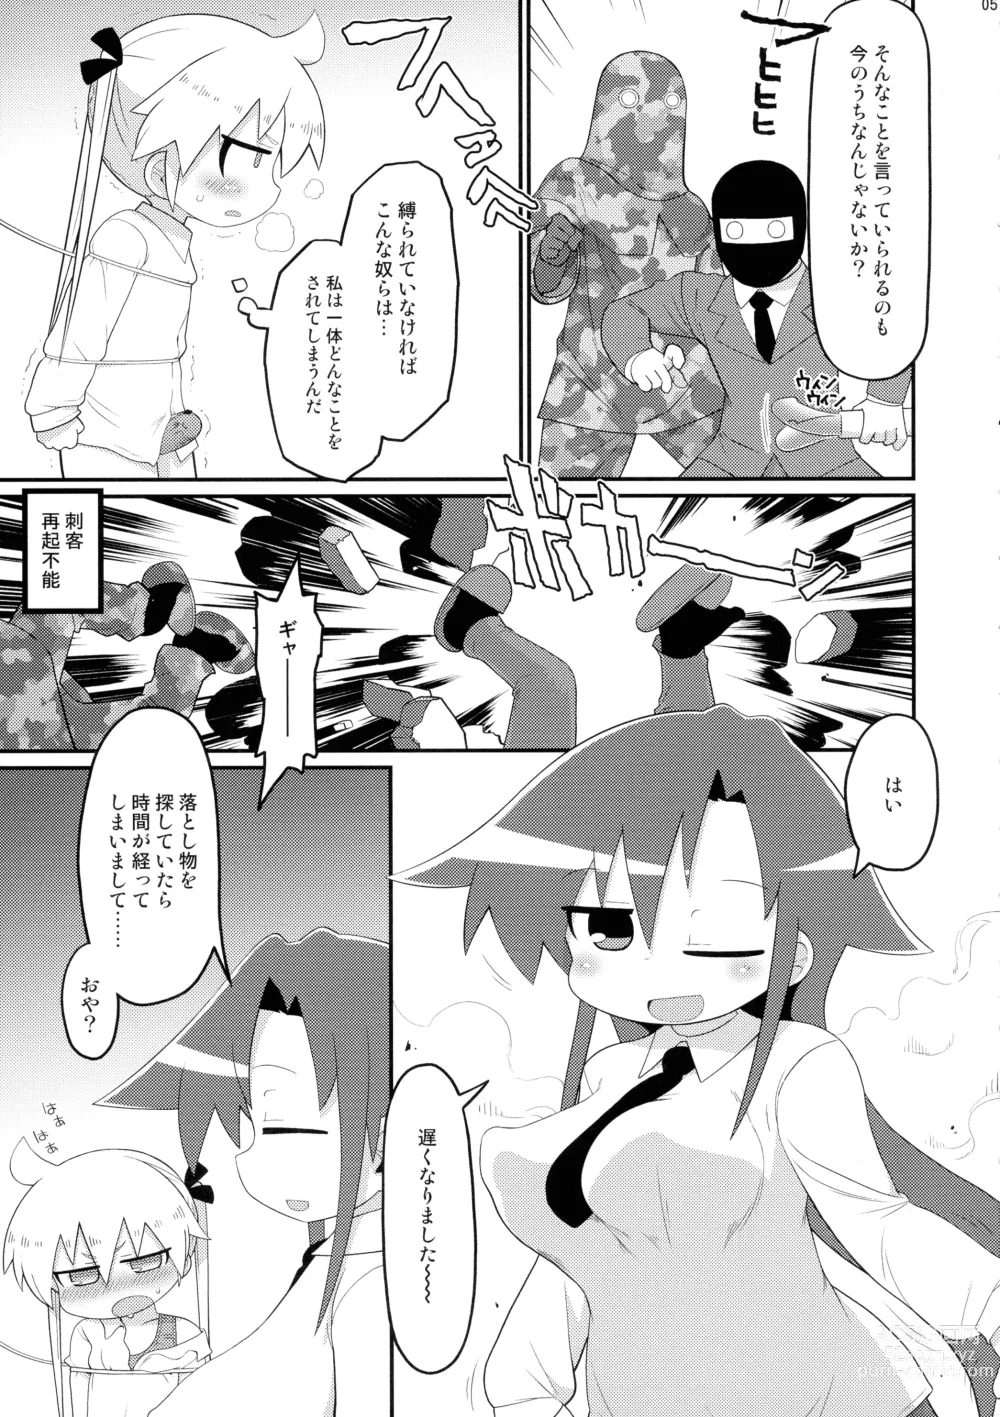 Page 5 of doujinshi Hekoheko Sonya to Chichideka Agiri